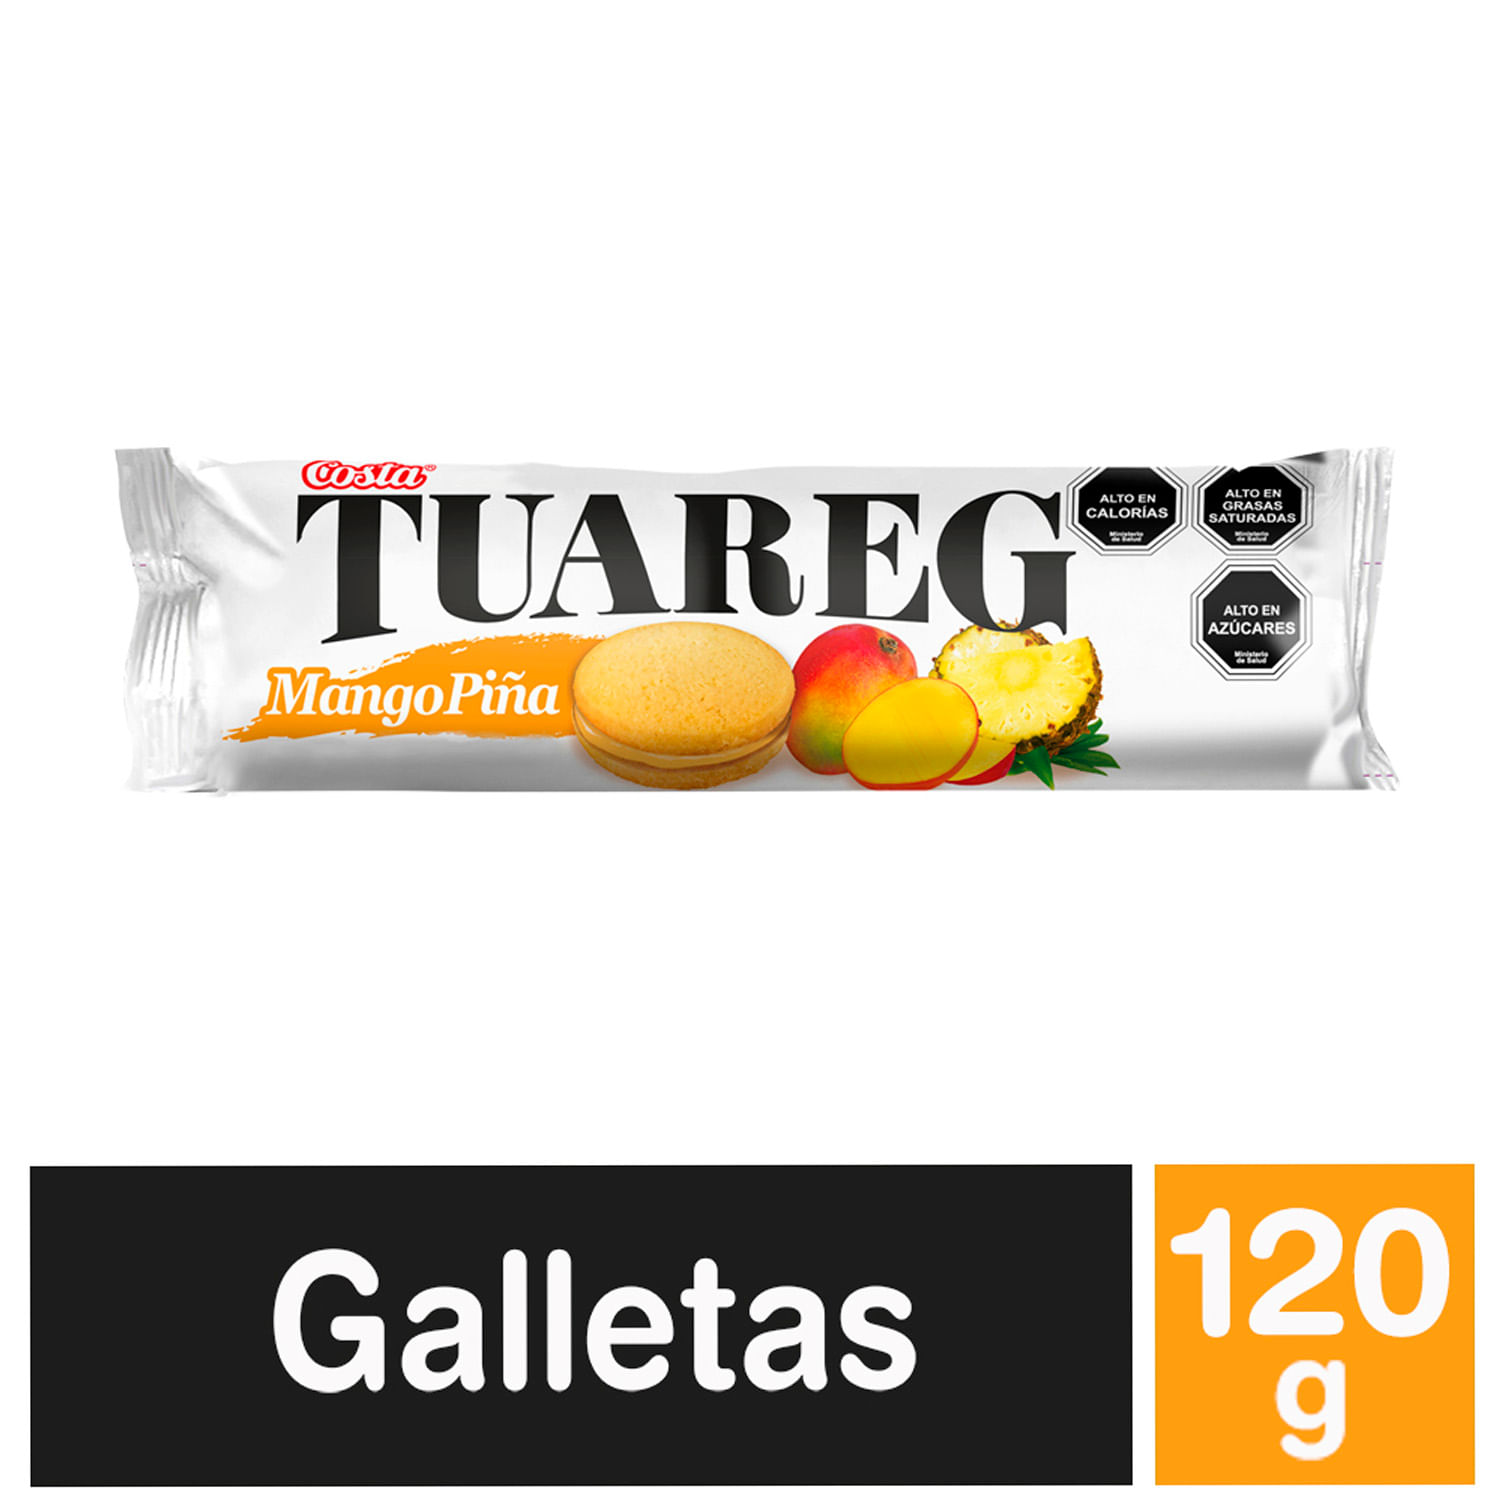 Galletas Tuareg mango piña 120 g 